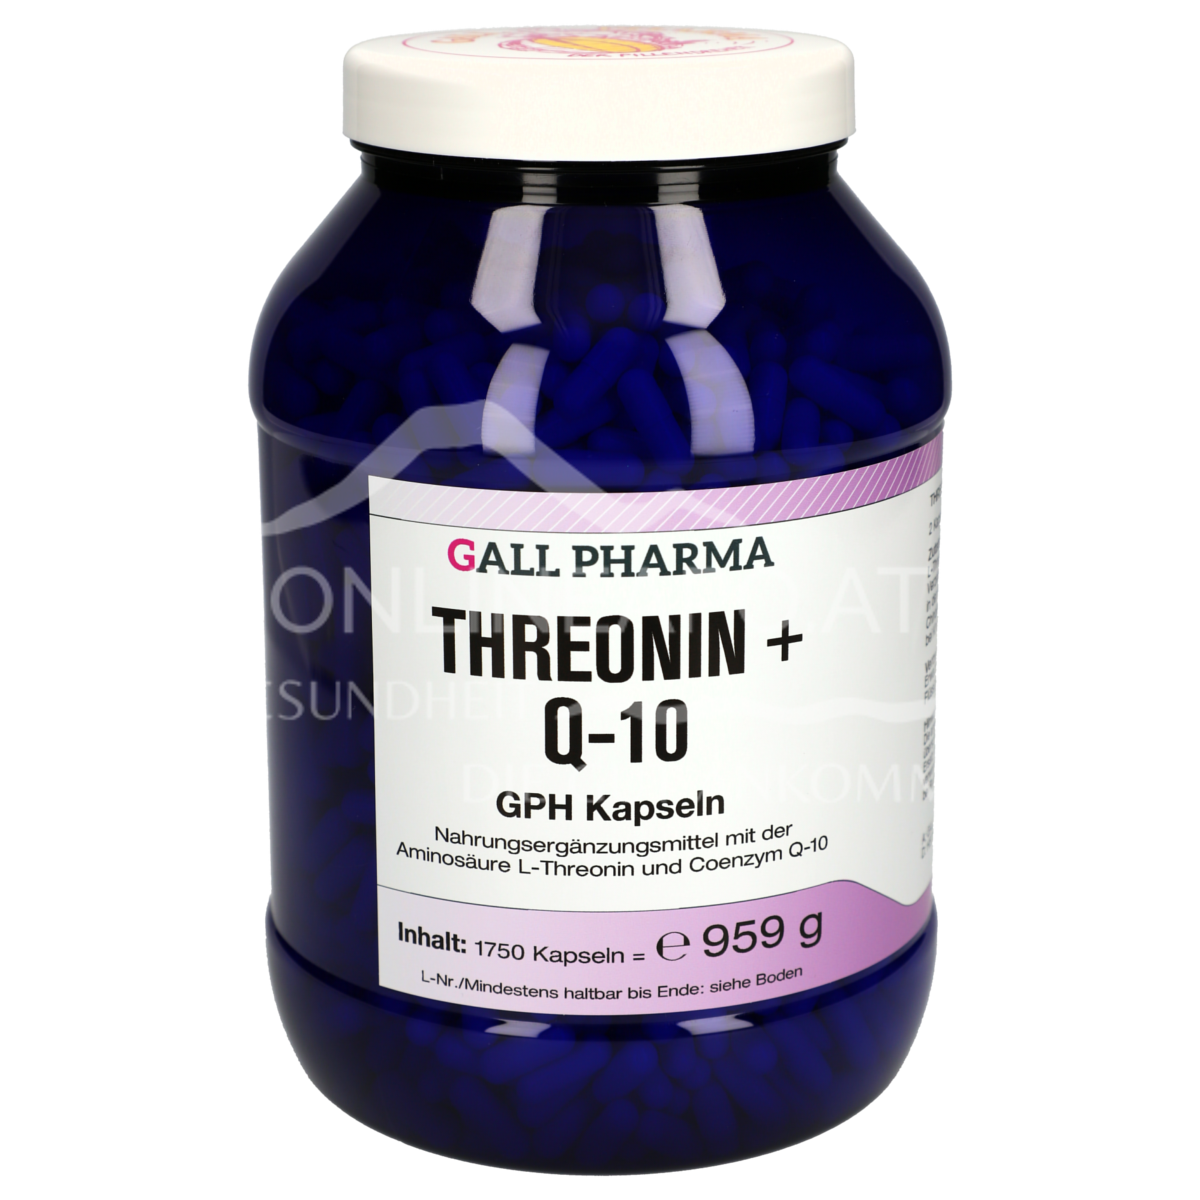 Gall Pharma Threonin + Q-10 Kapseln